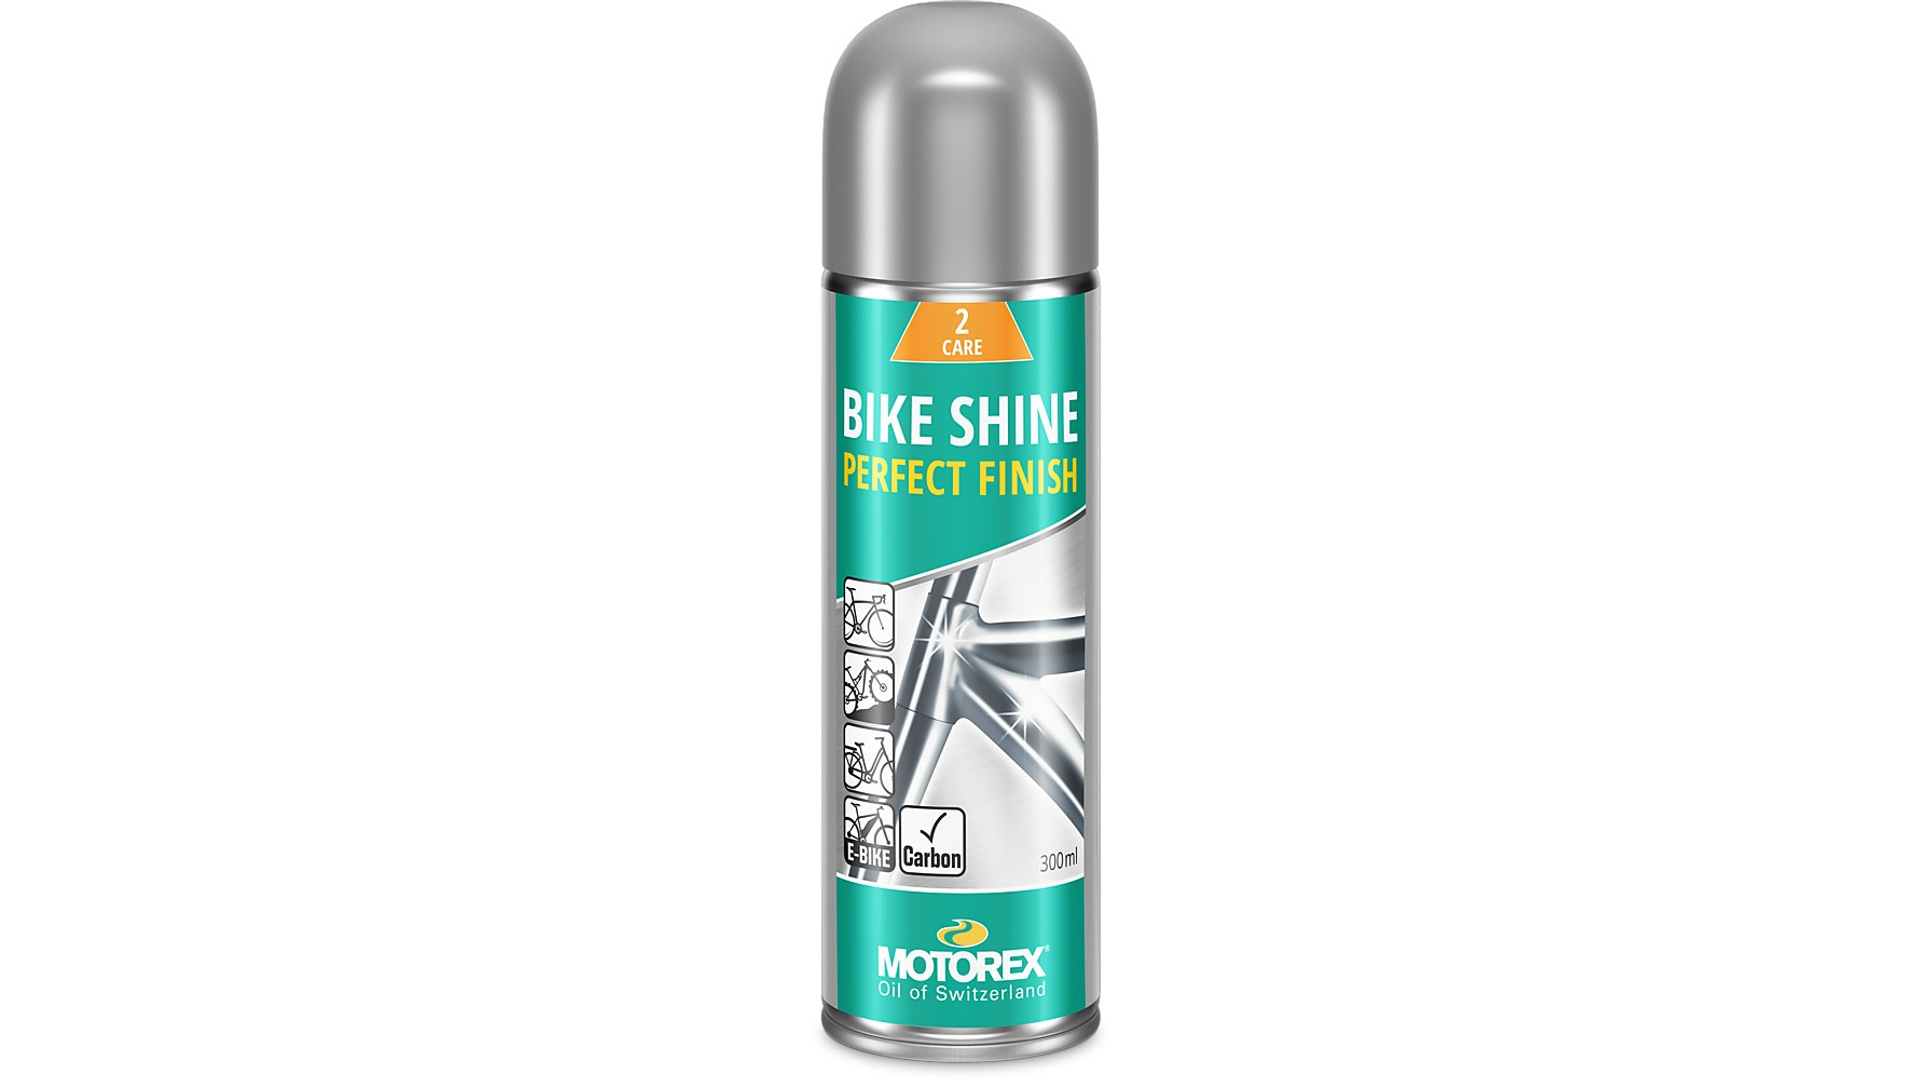 MOTOREX Bike Shine kerékpárfény spray, 300ml